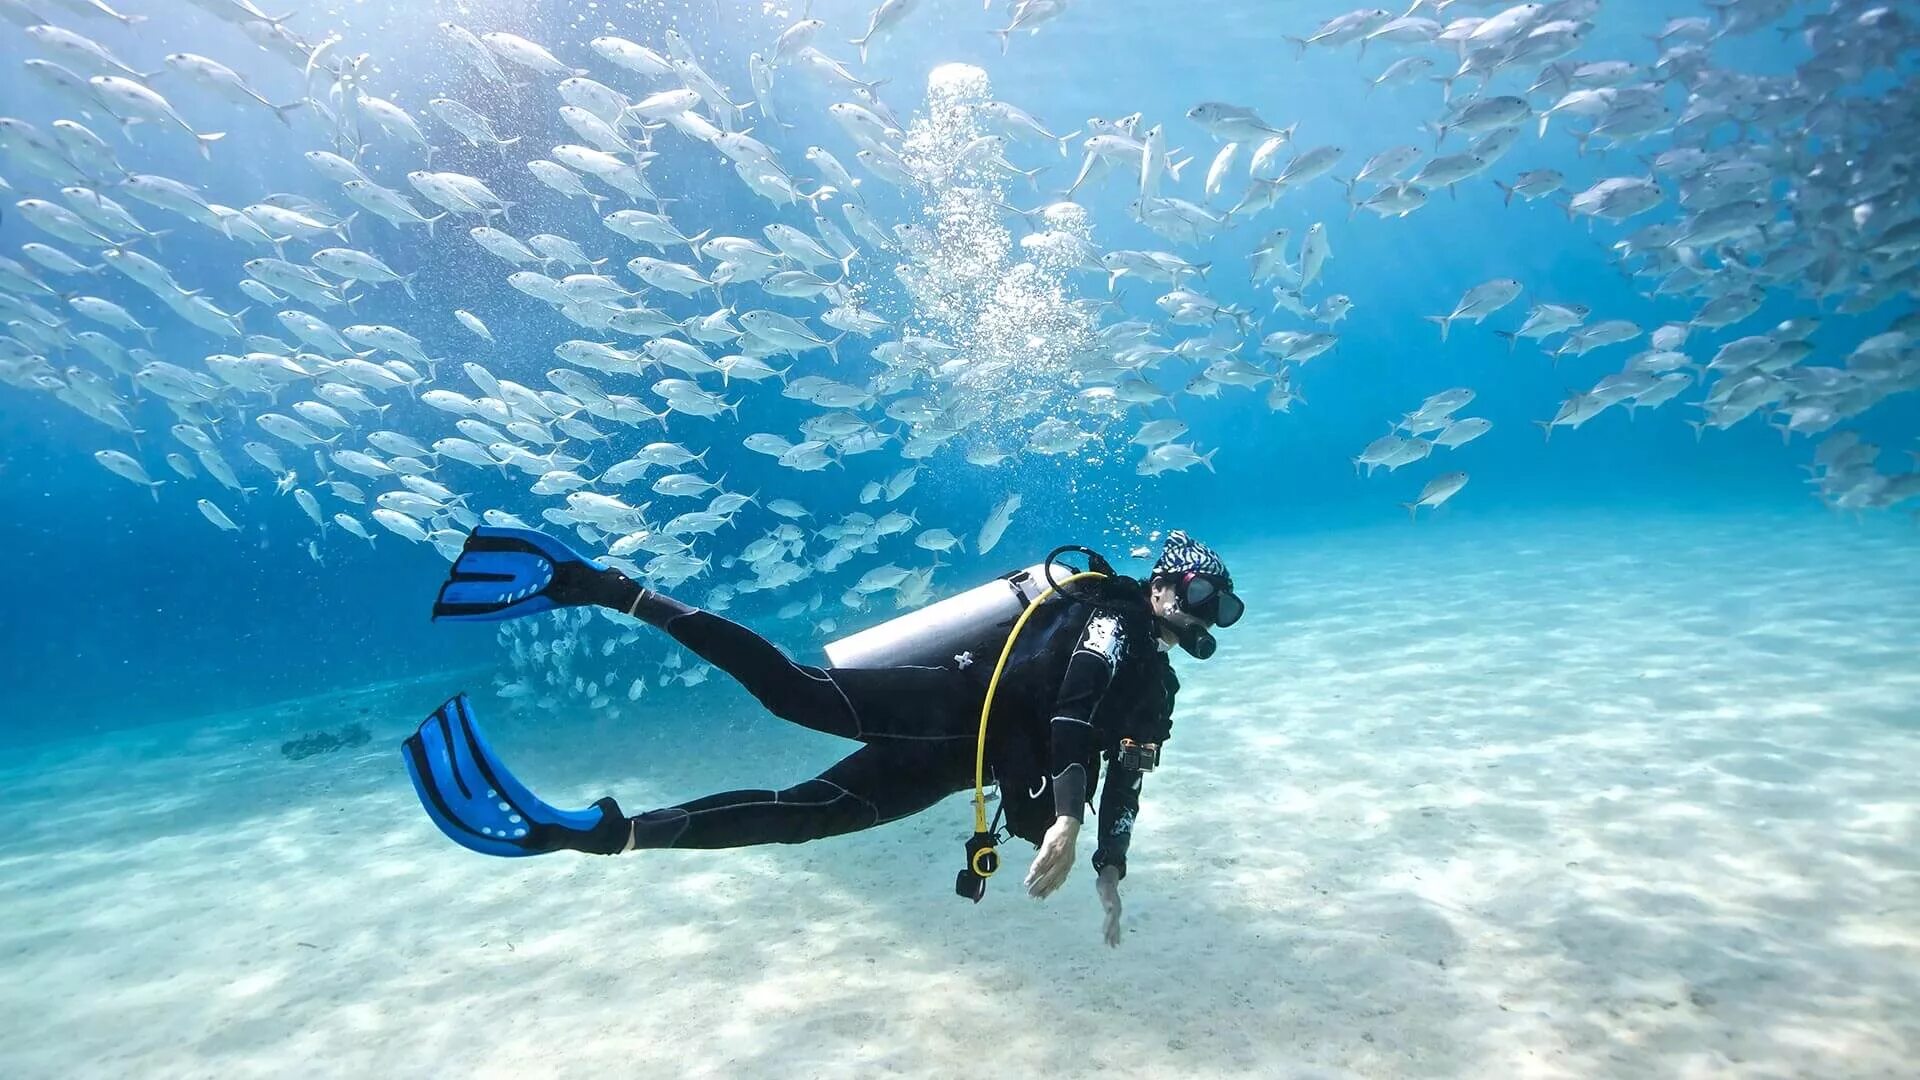 Sea dive. Дайвинг Scuba. Скуба дайвинг вид спорта. Phuket дайвинг. Подводный туризм.